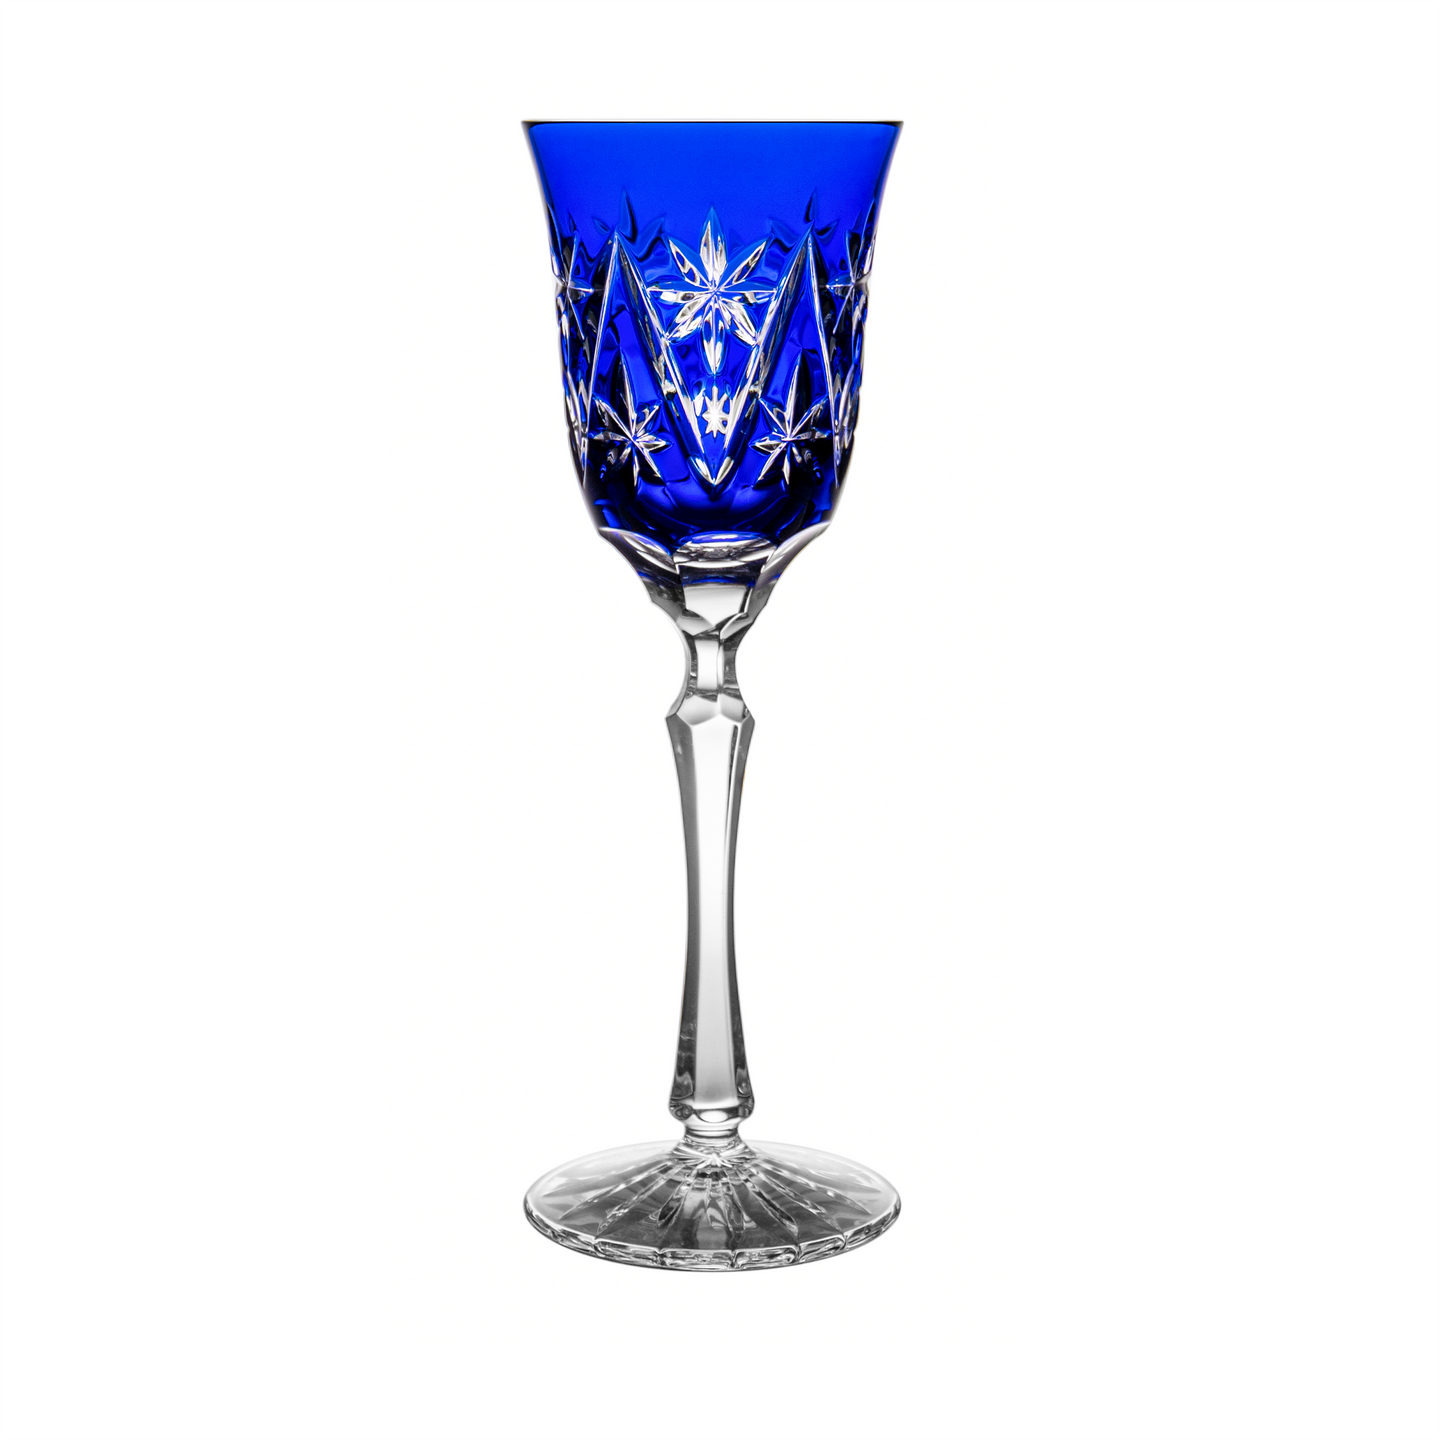 Léon Blue Small Wine Glass